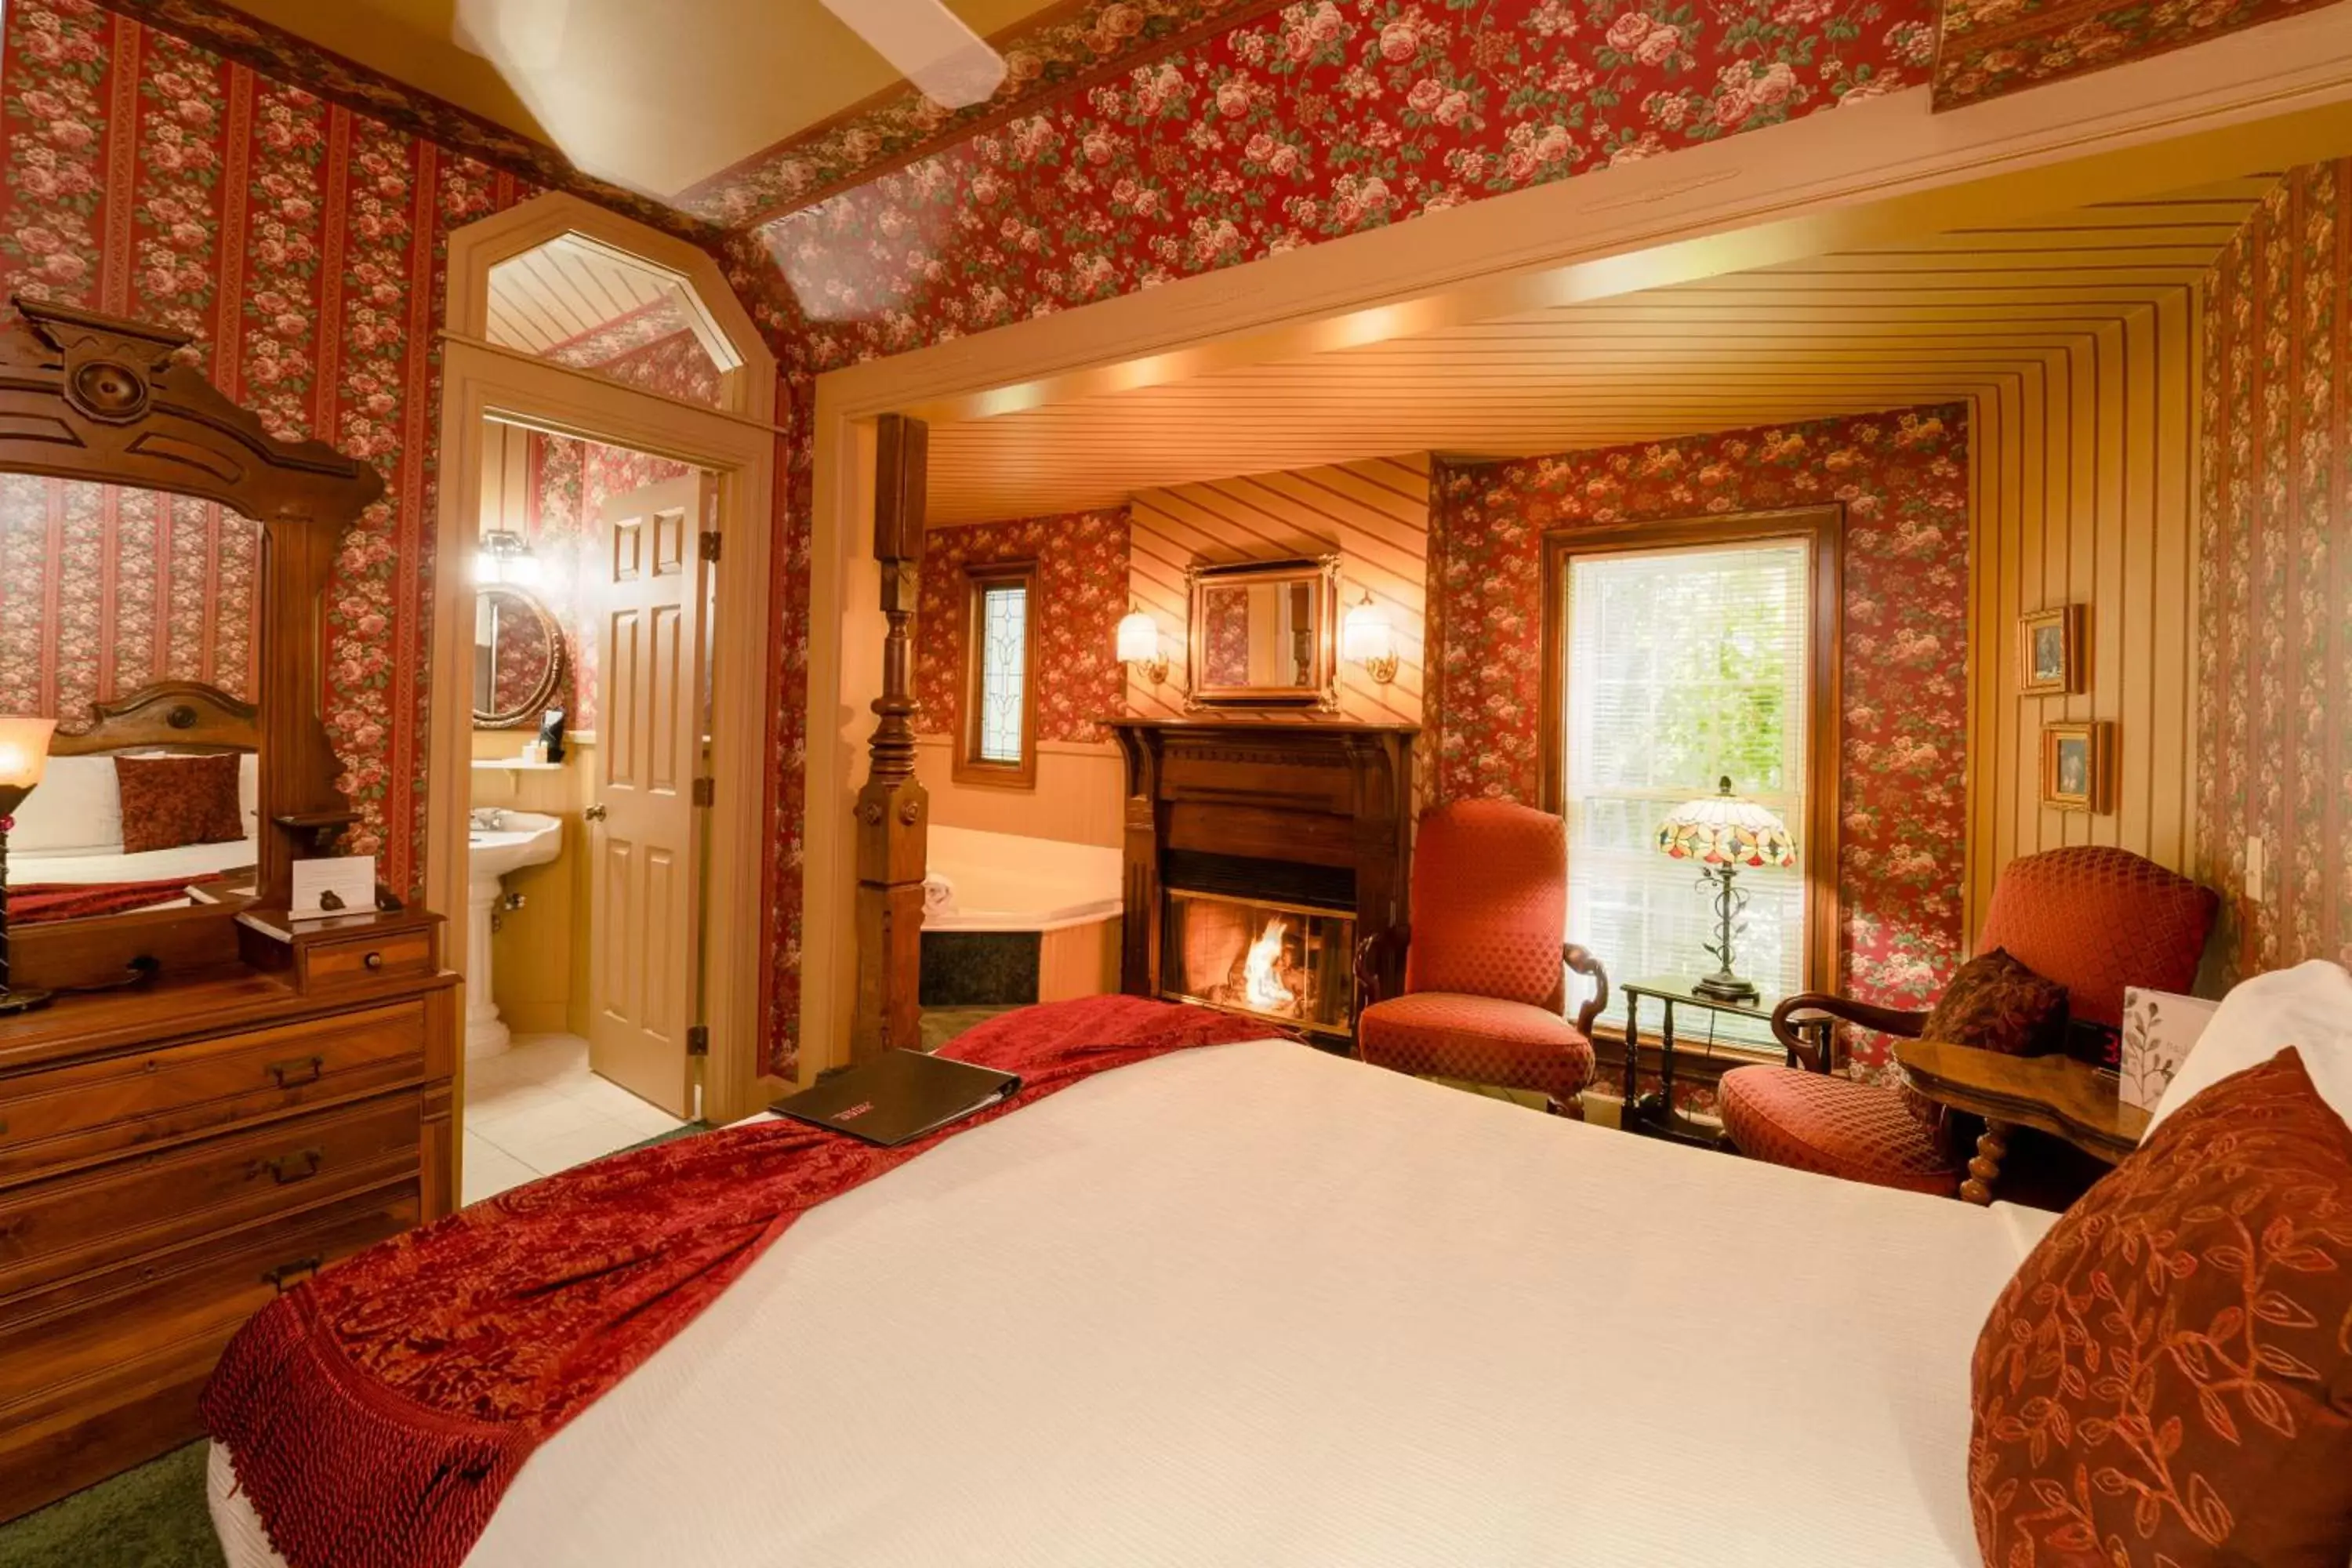 Queen Room in Yelton Manor Bed and Breakfast